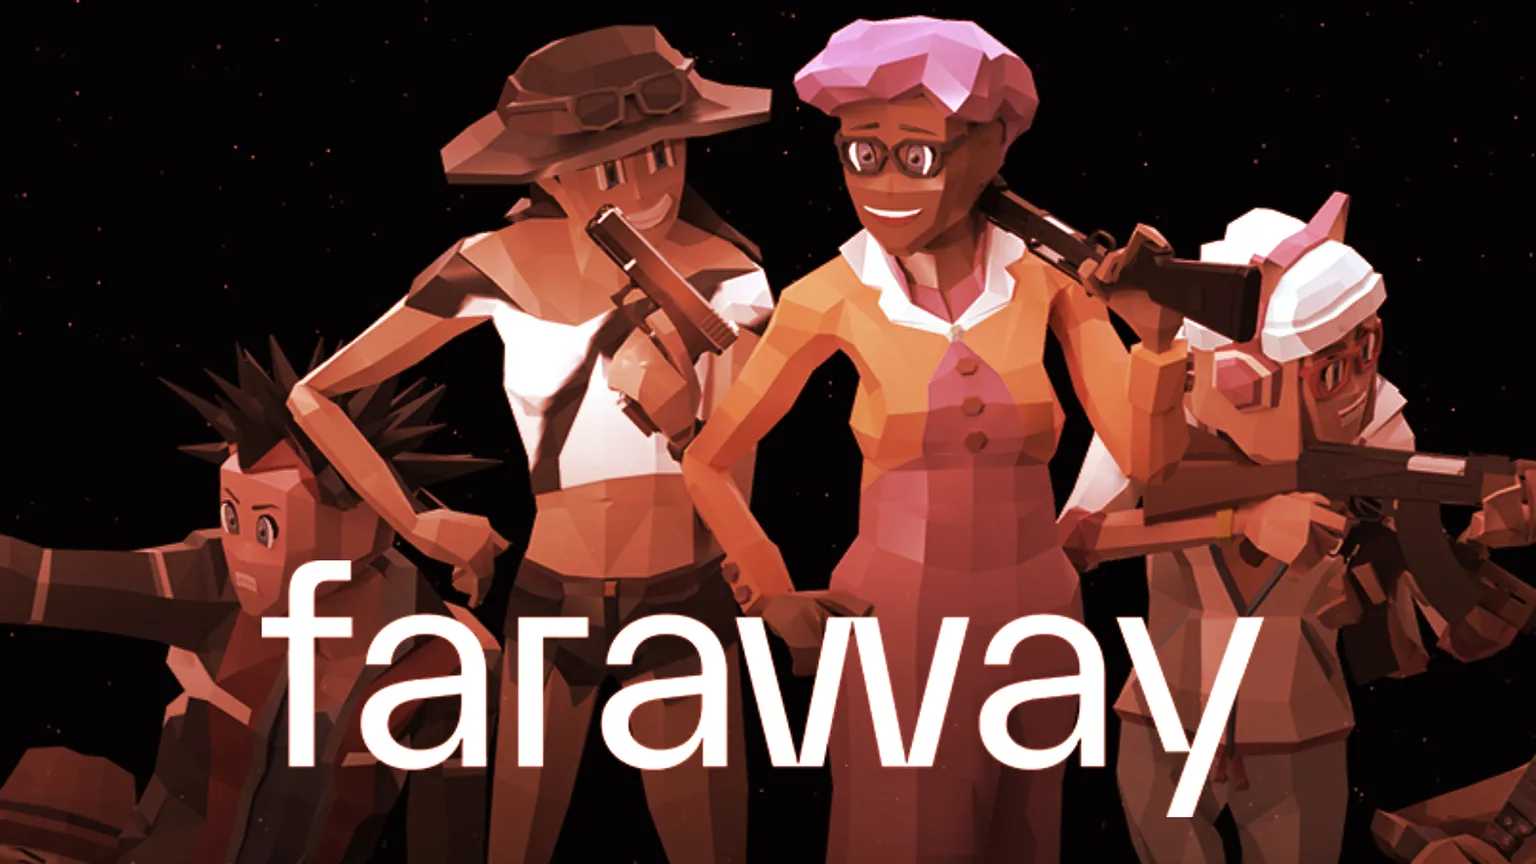 Image: Faraway